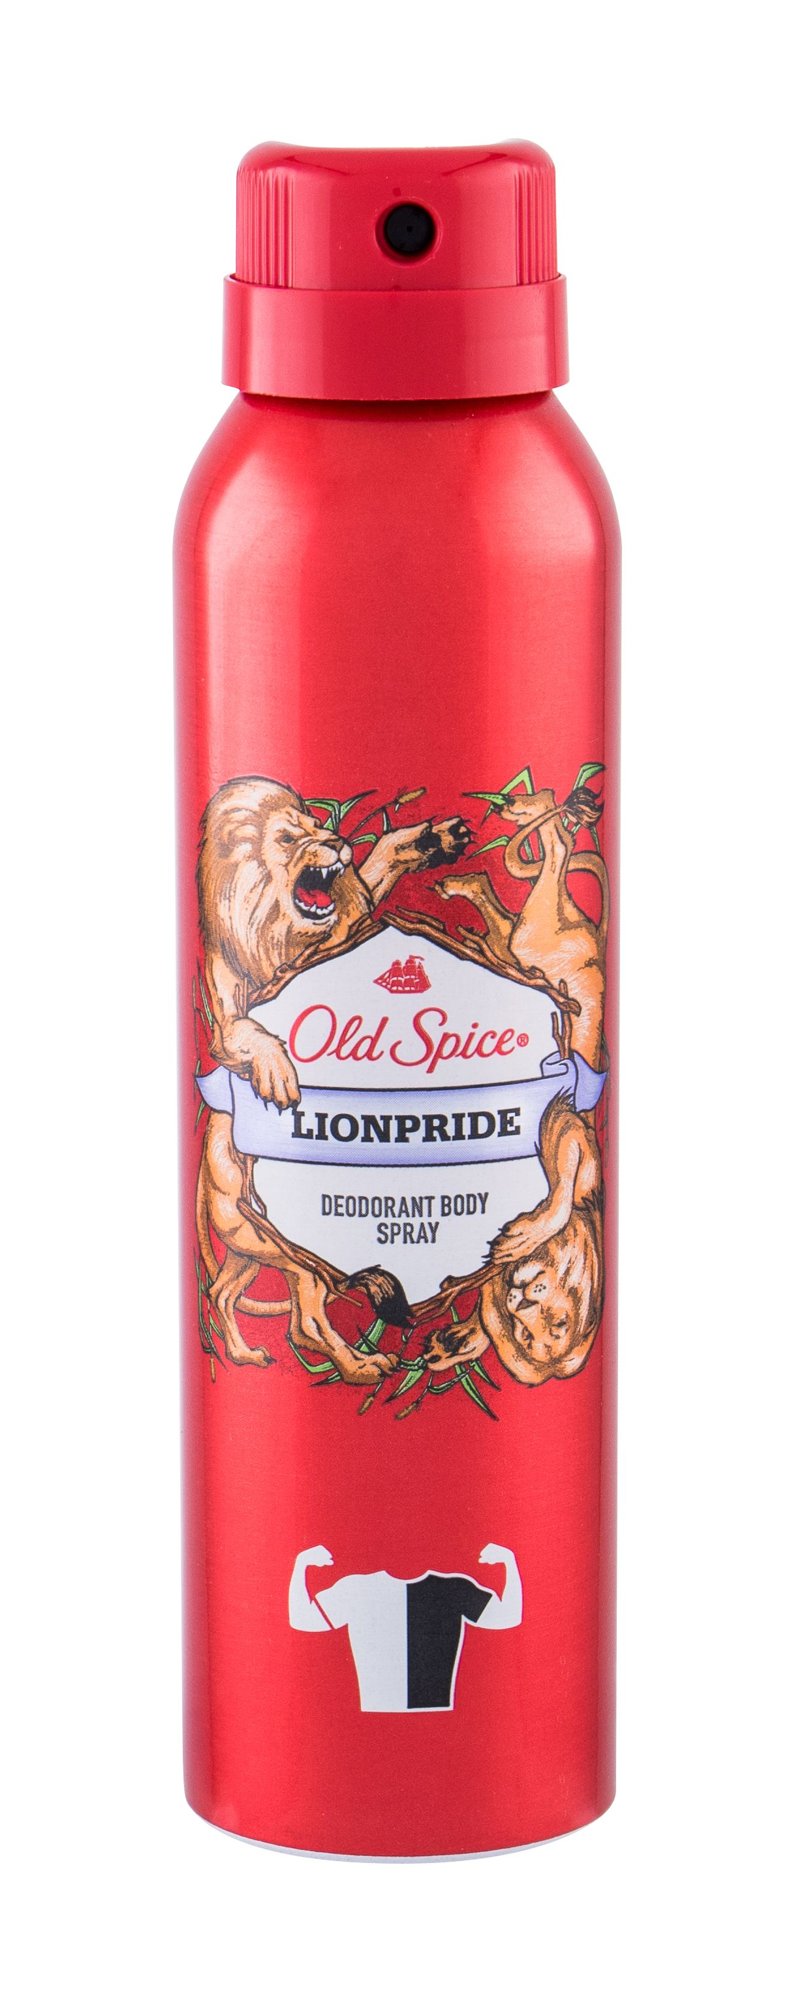 Old Spice Lionpride